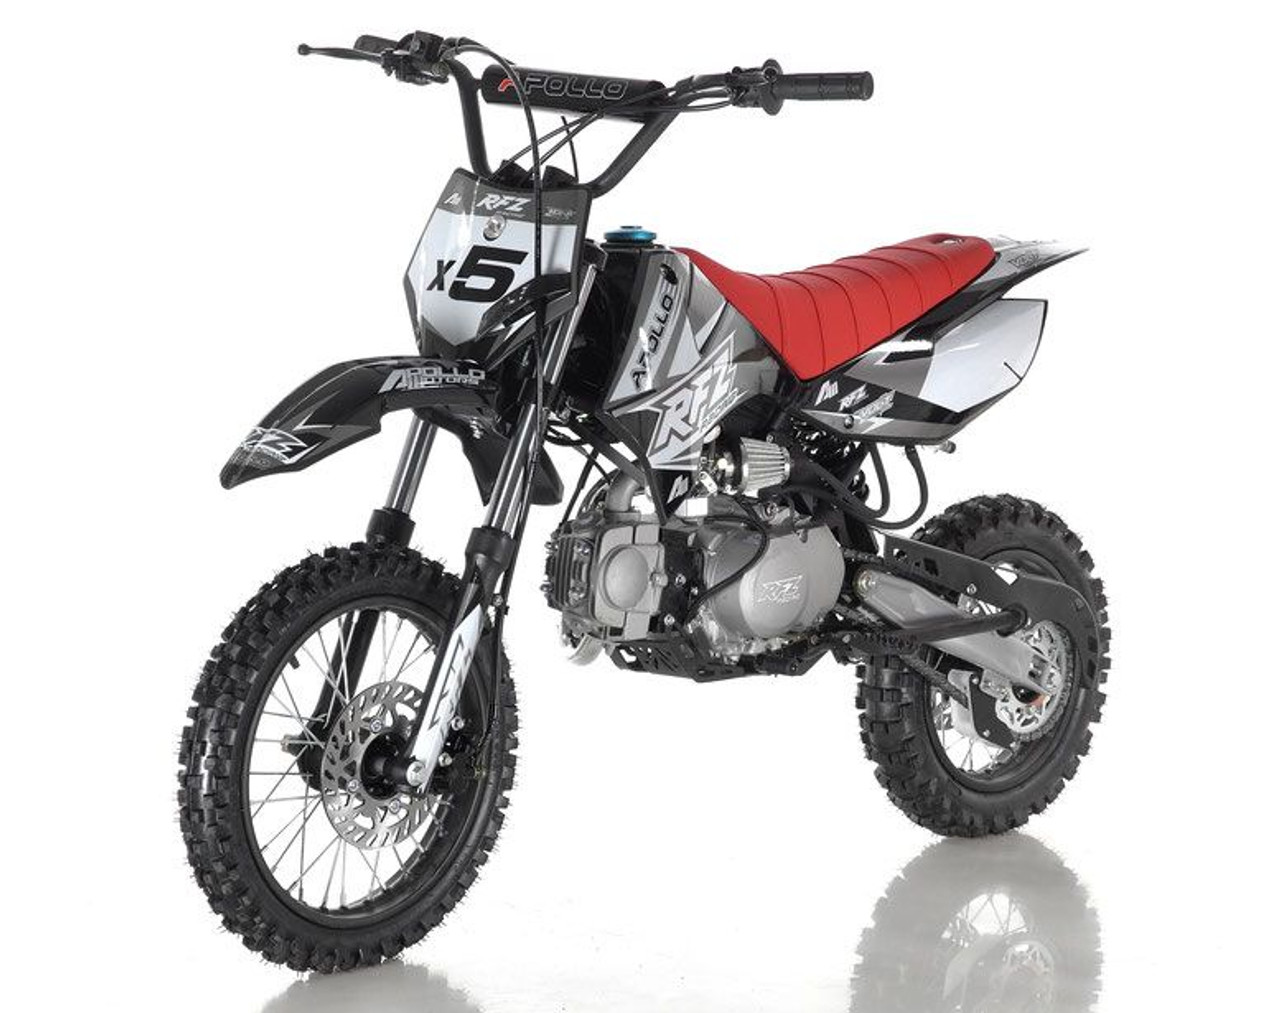 APOLLO DB-X5 125cc (Twin-Spare Tubular Frame) MANUAL SHIFT Dirt Bike, 4 stroke, Single Cylinder - BLACK